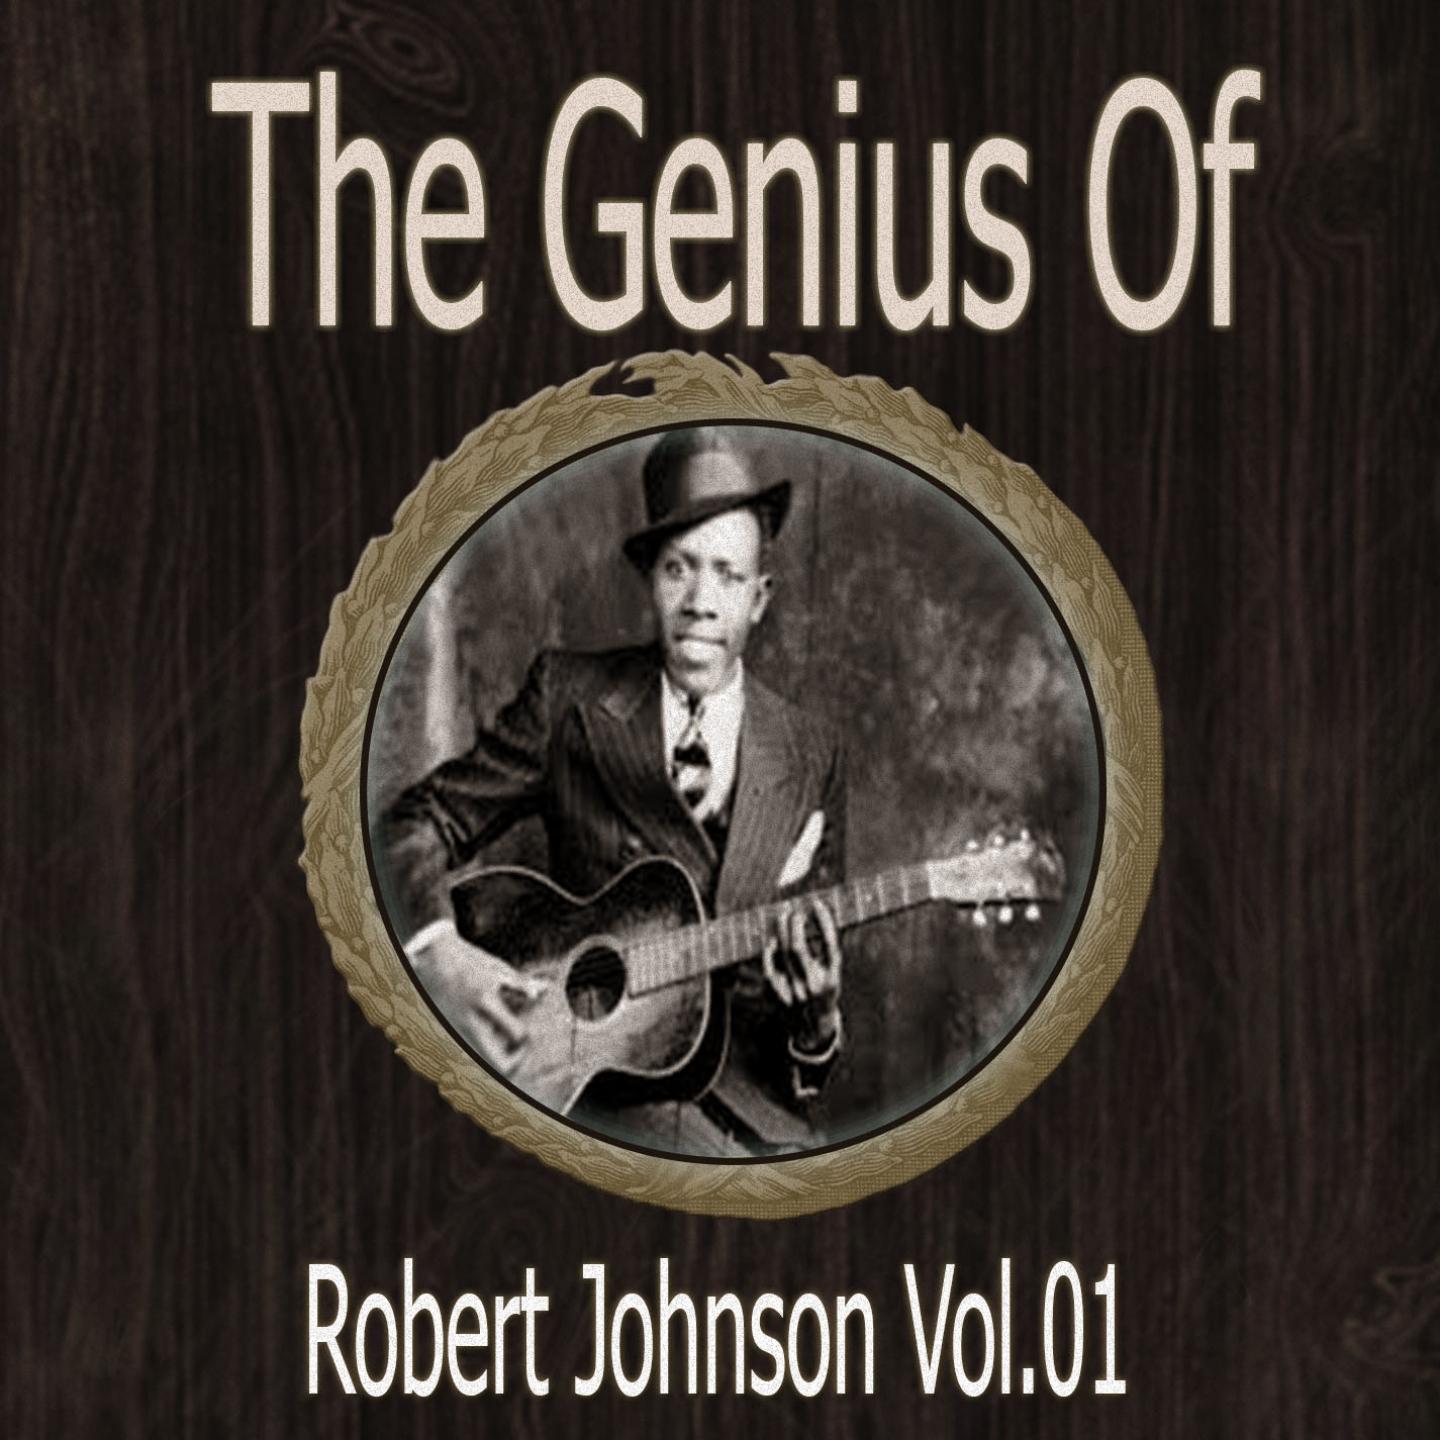 The Genius of Robert Johnson Vol 01